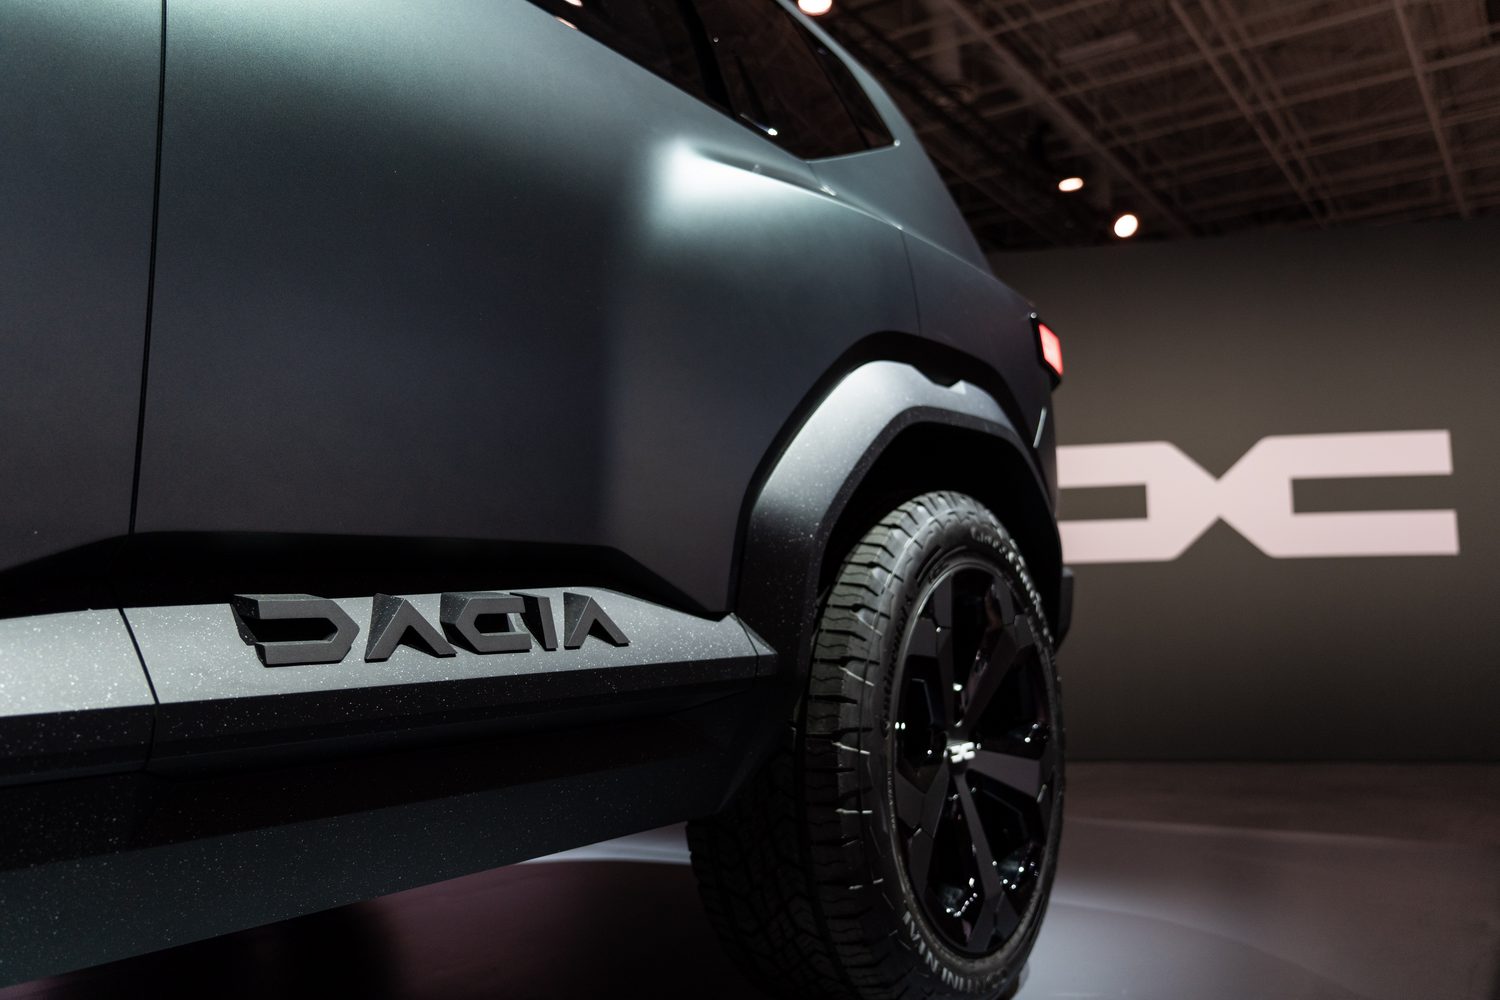 Dacia outlines plans for smarter future